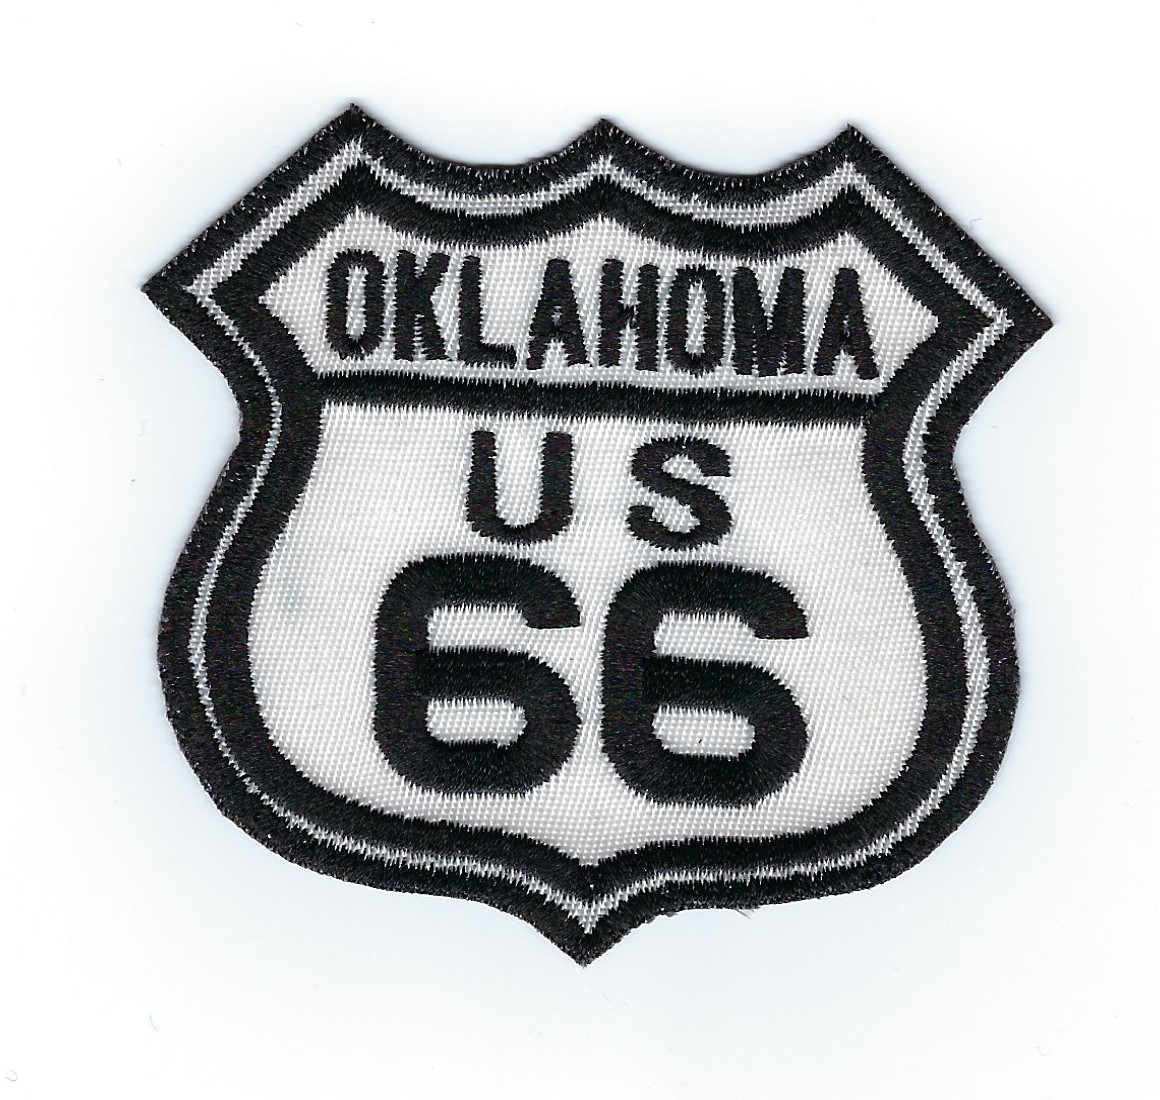 Route 66 Oklahoma US patch, black & white street sign design, 3" x 2.8"